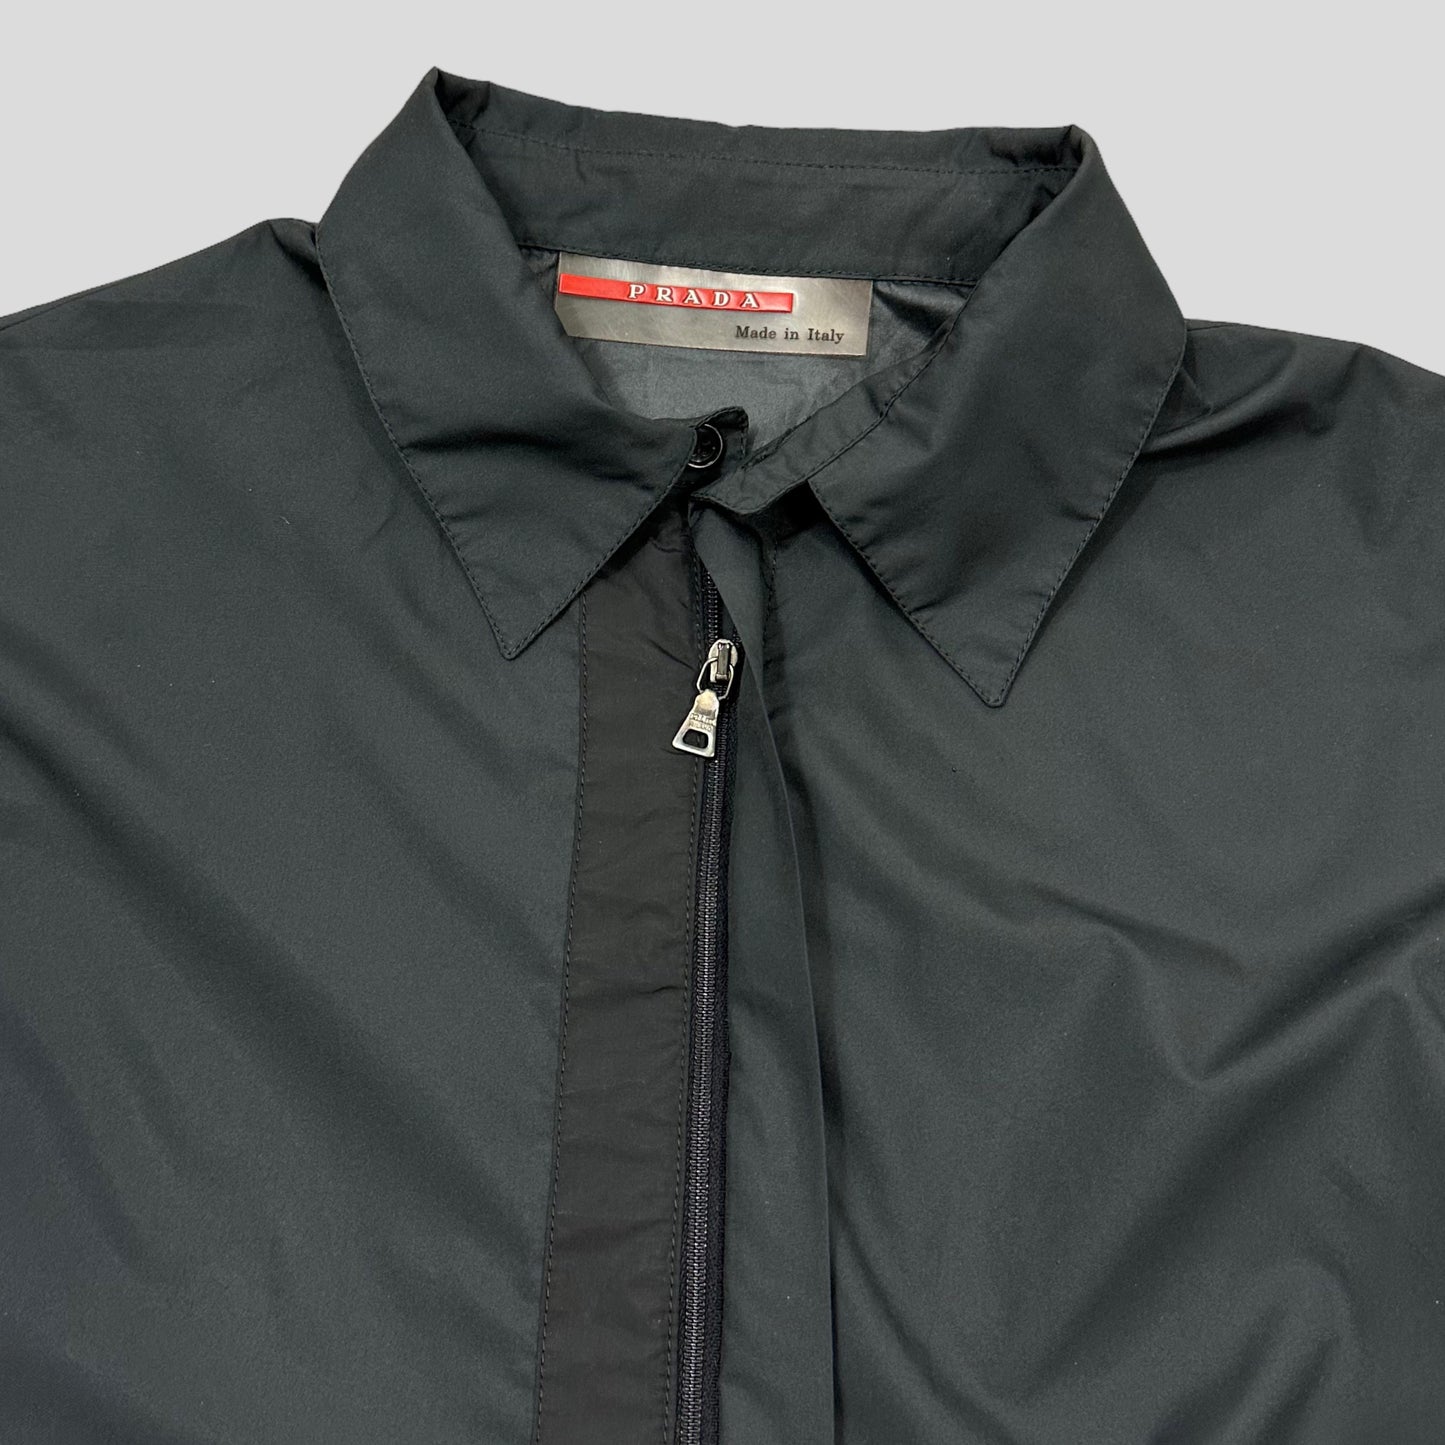 Prada Sport SS99 Nylon Zip-up Boxy Overshirt - XL